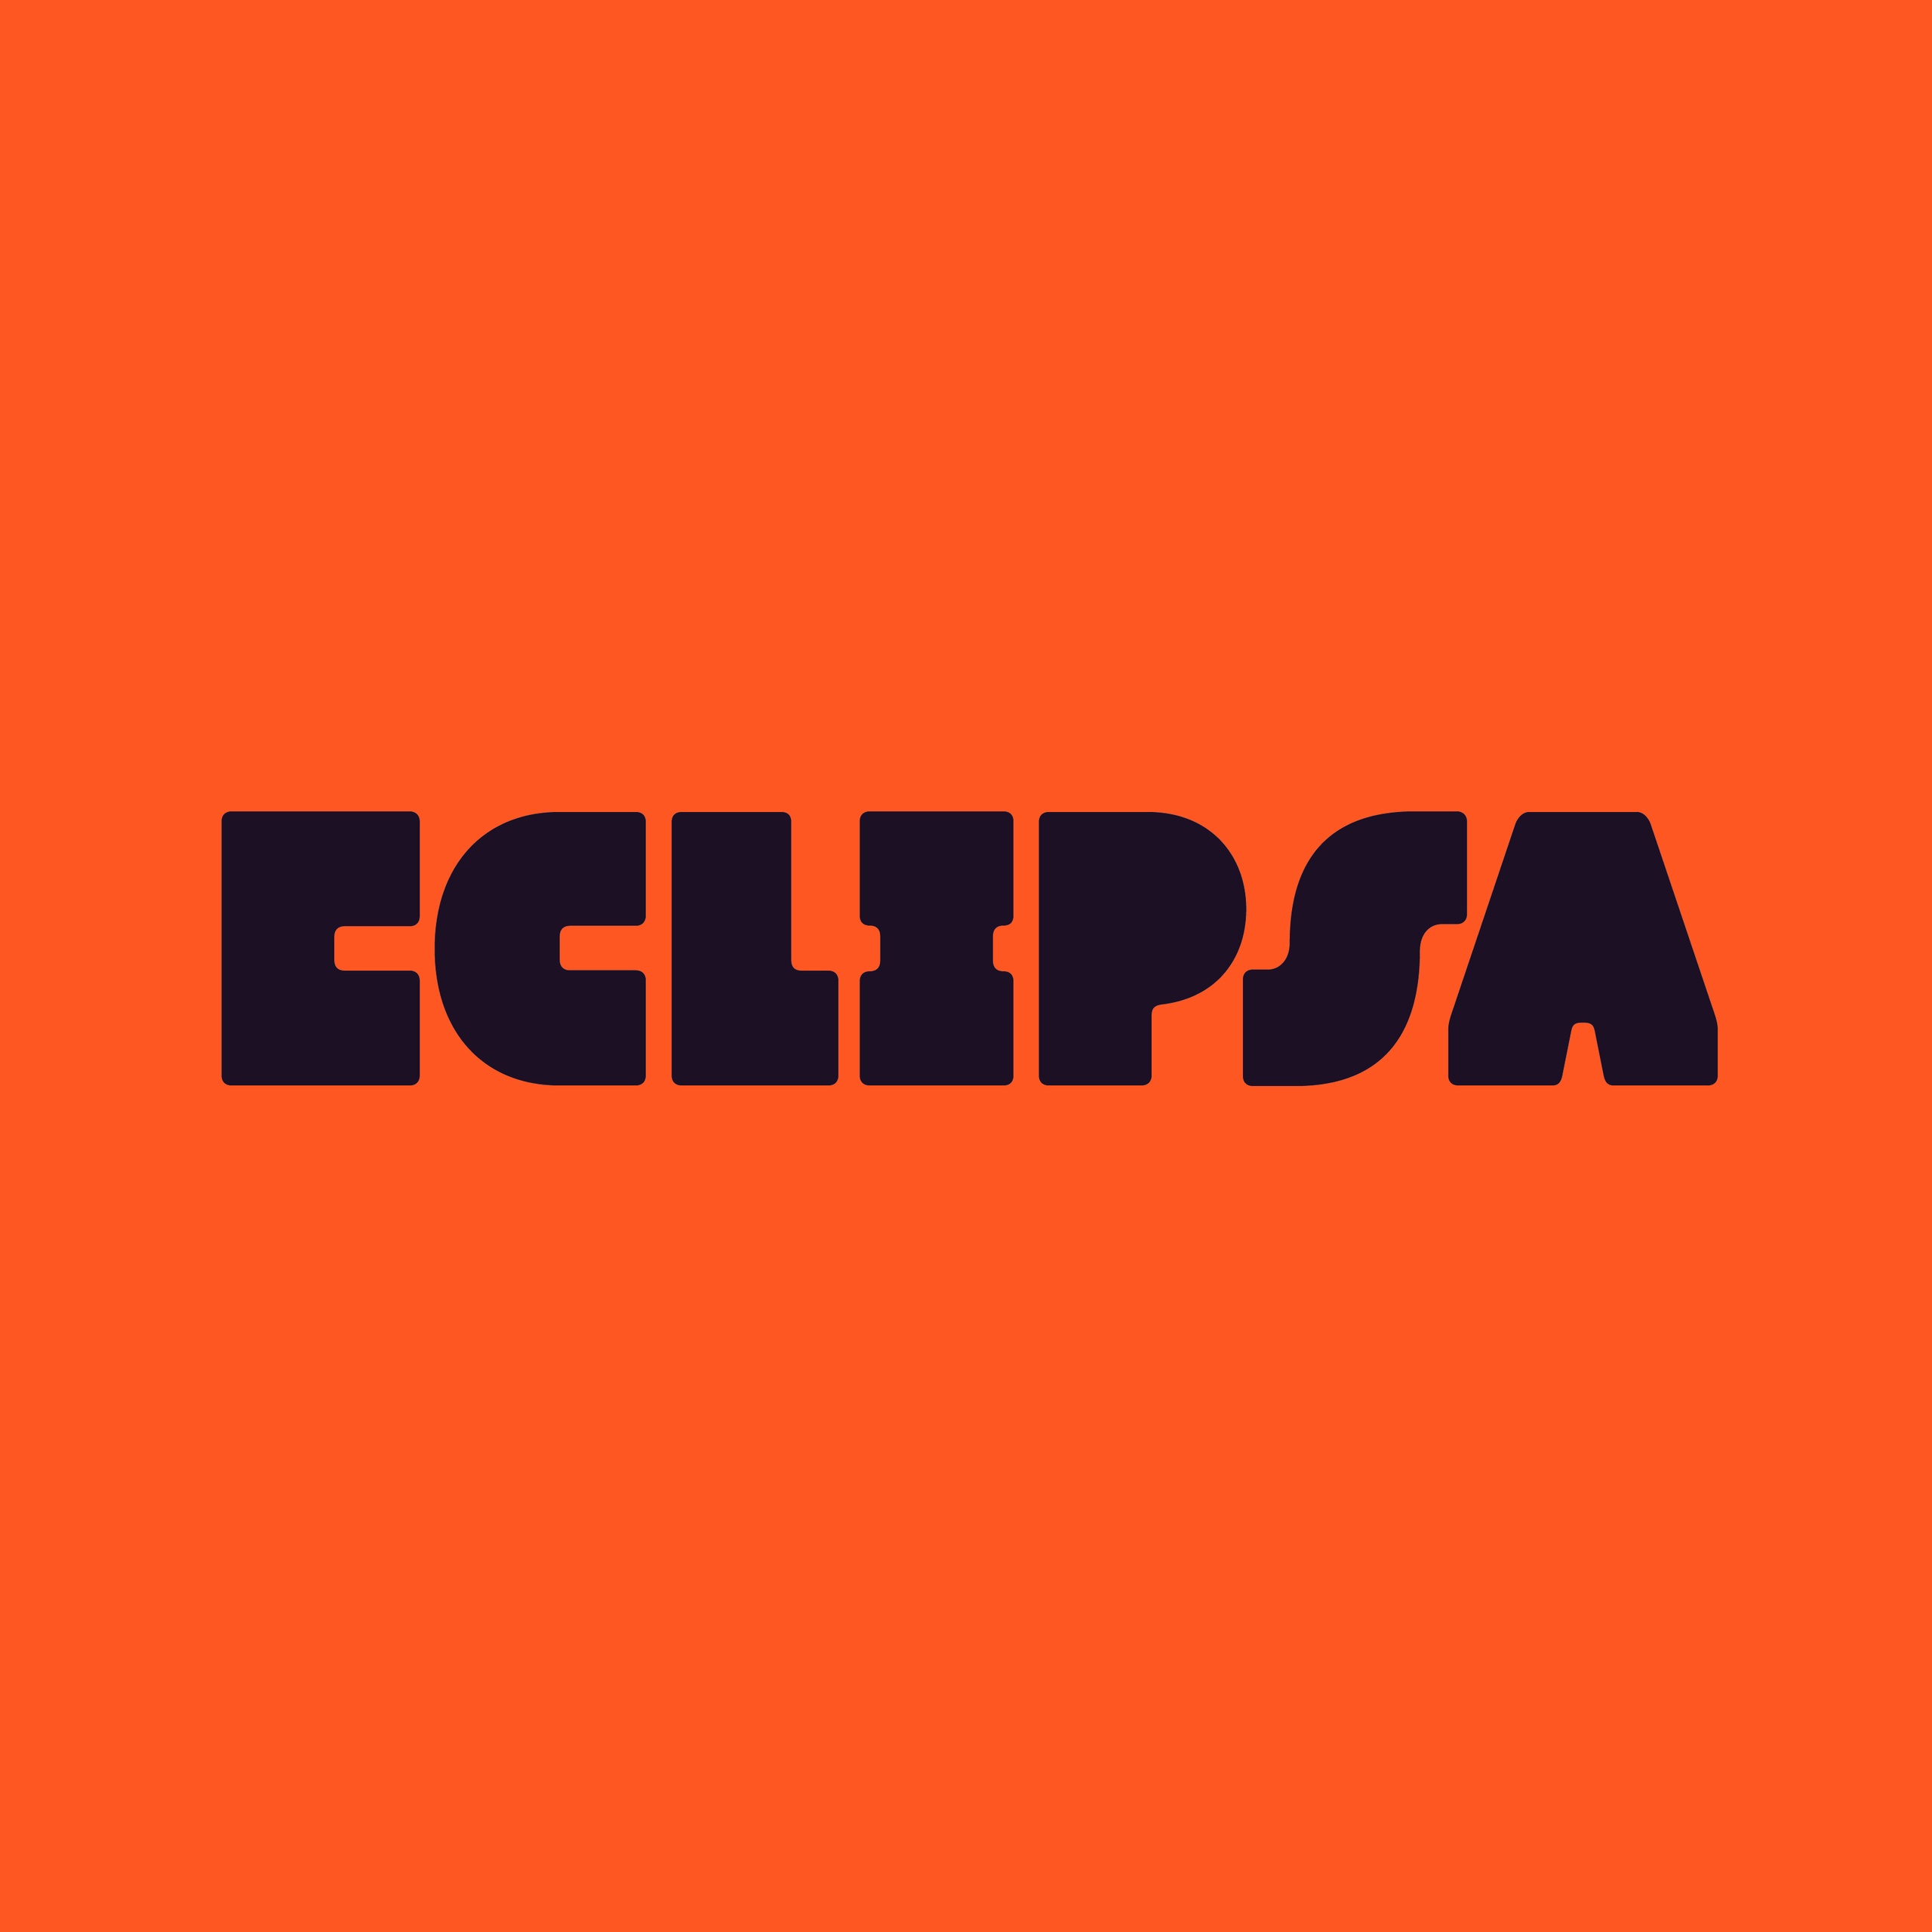 Police Eclipsa